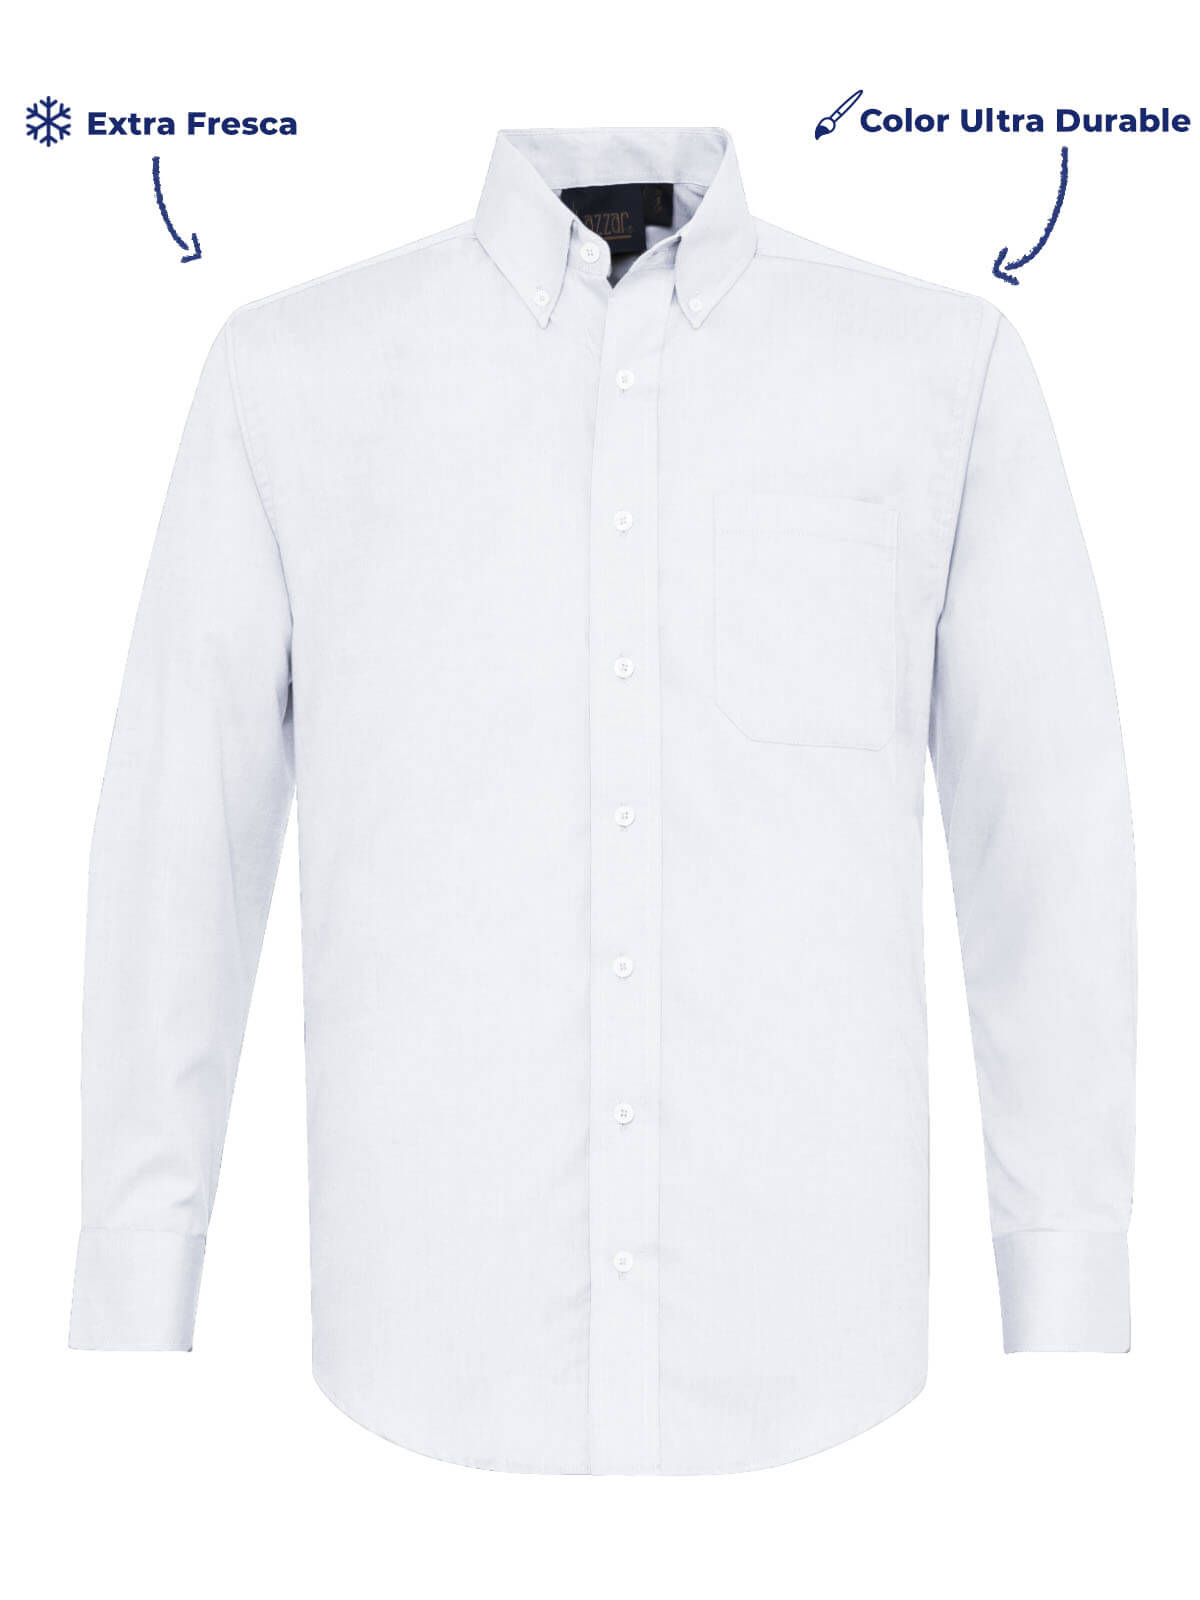 Camisas oxford color blanca manga larga